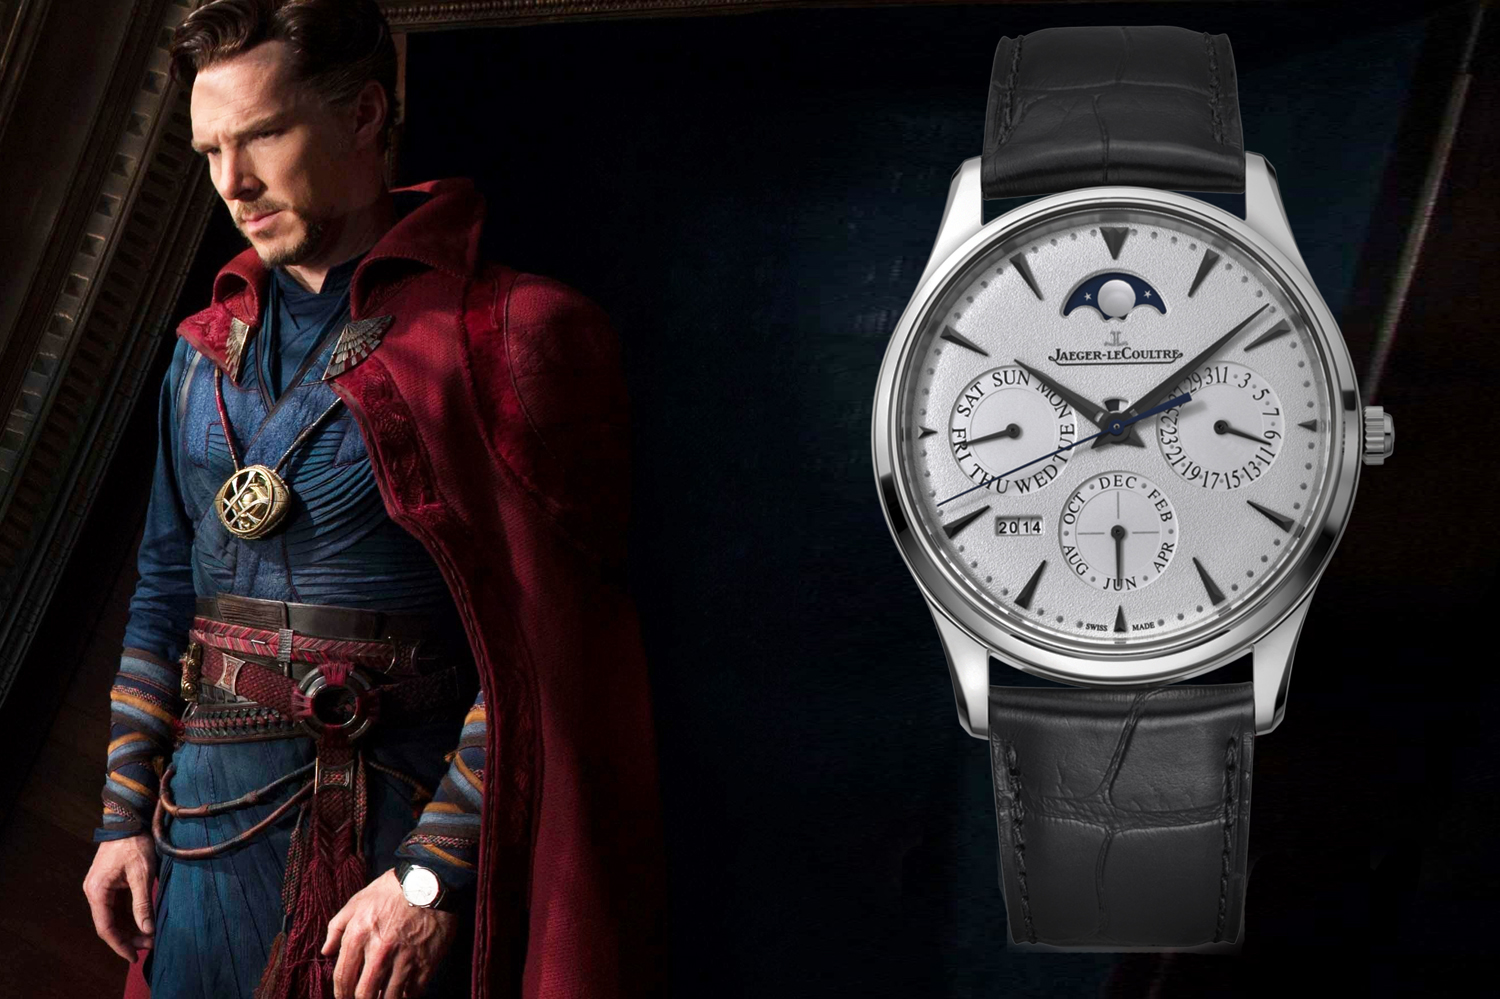 Meet Doctor Strange's costar, the sleek JaegerLeCoultre watch Men's